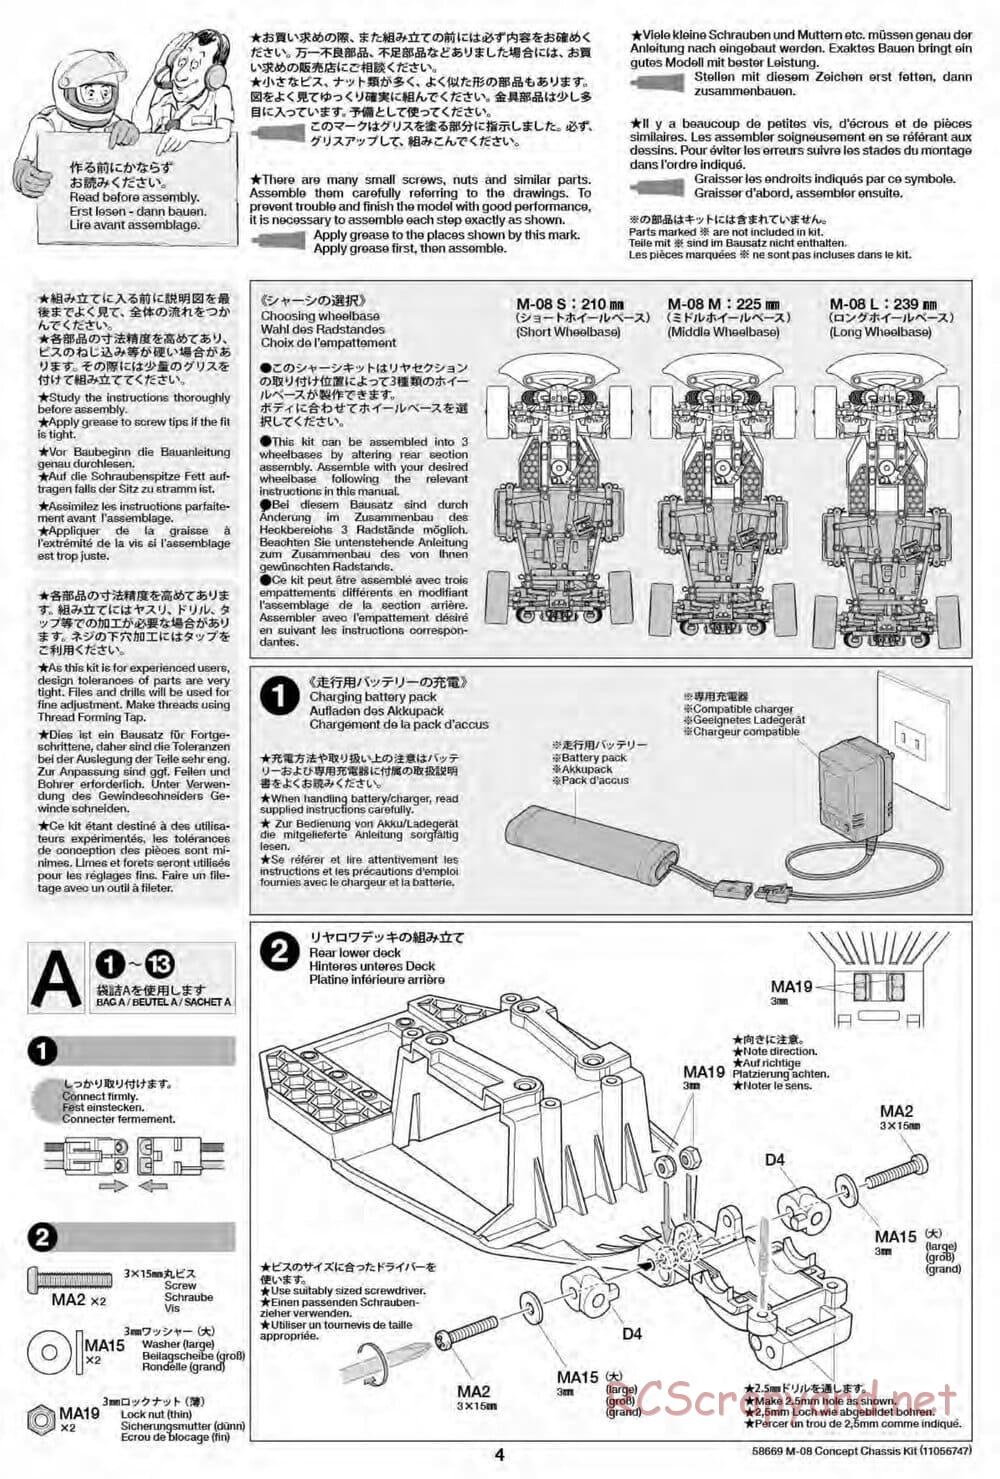 Tamiya - M-08 Concept Chassis - Manual - Page 4